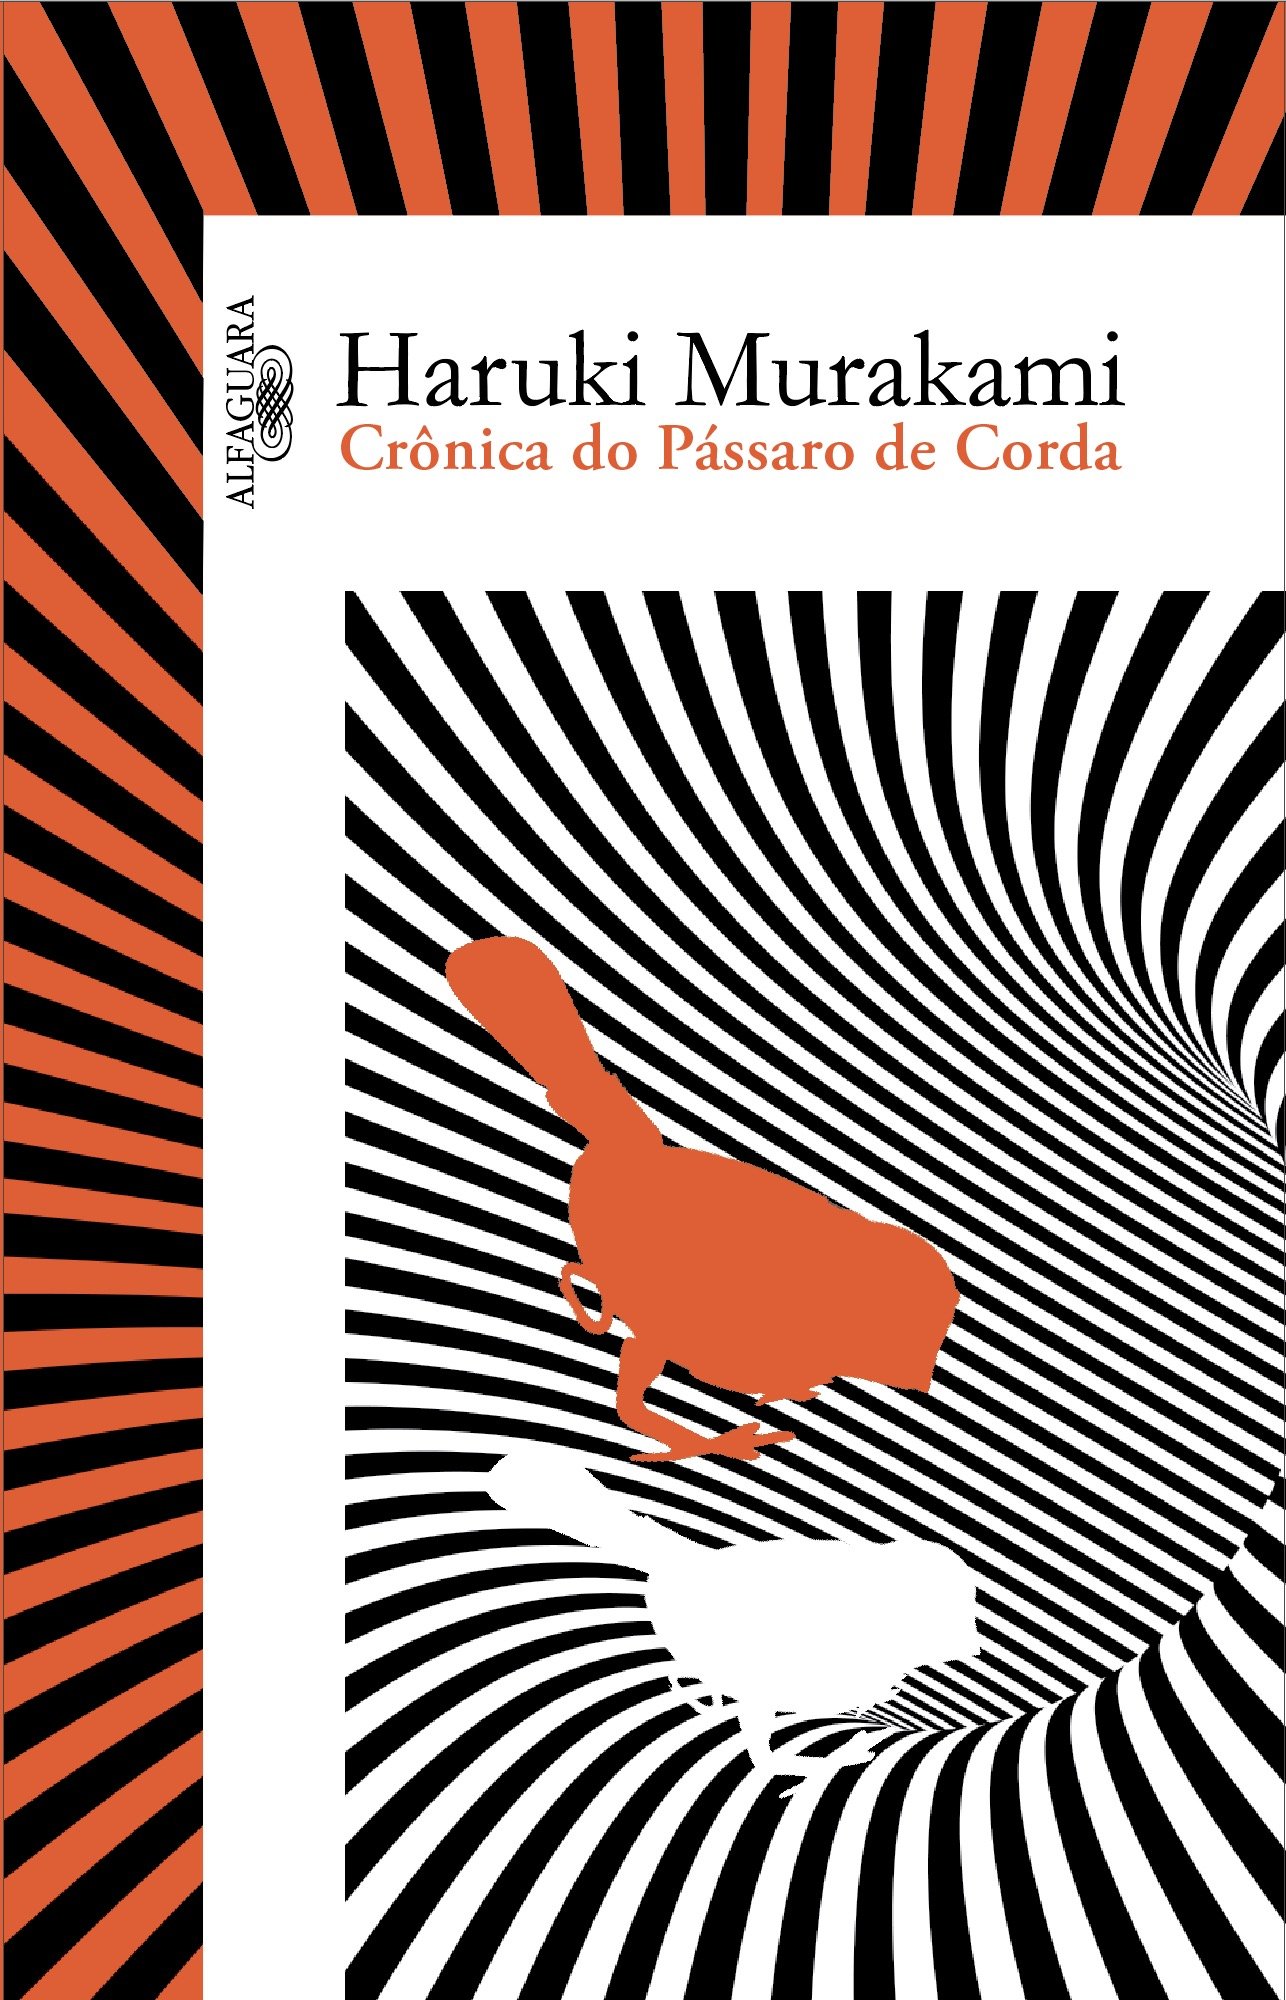 Haruki Murakami, Eunice Suenaga (Tradutora): Crônica do Pássaro de Corda (Português language, 2017, Alfaguara)